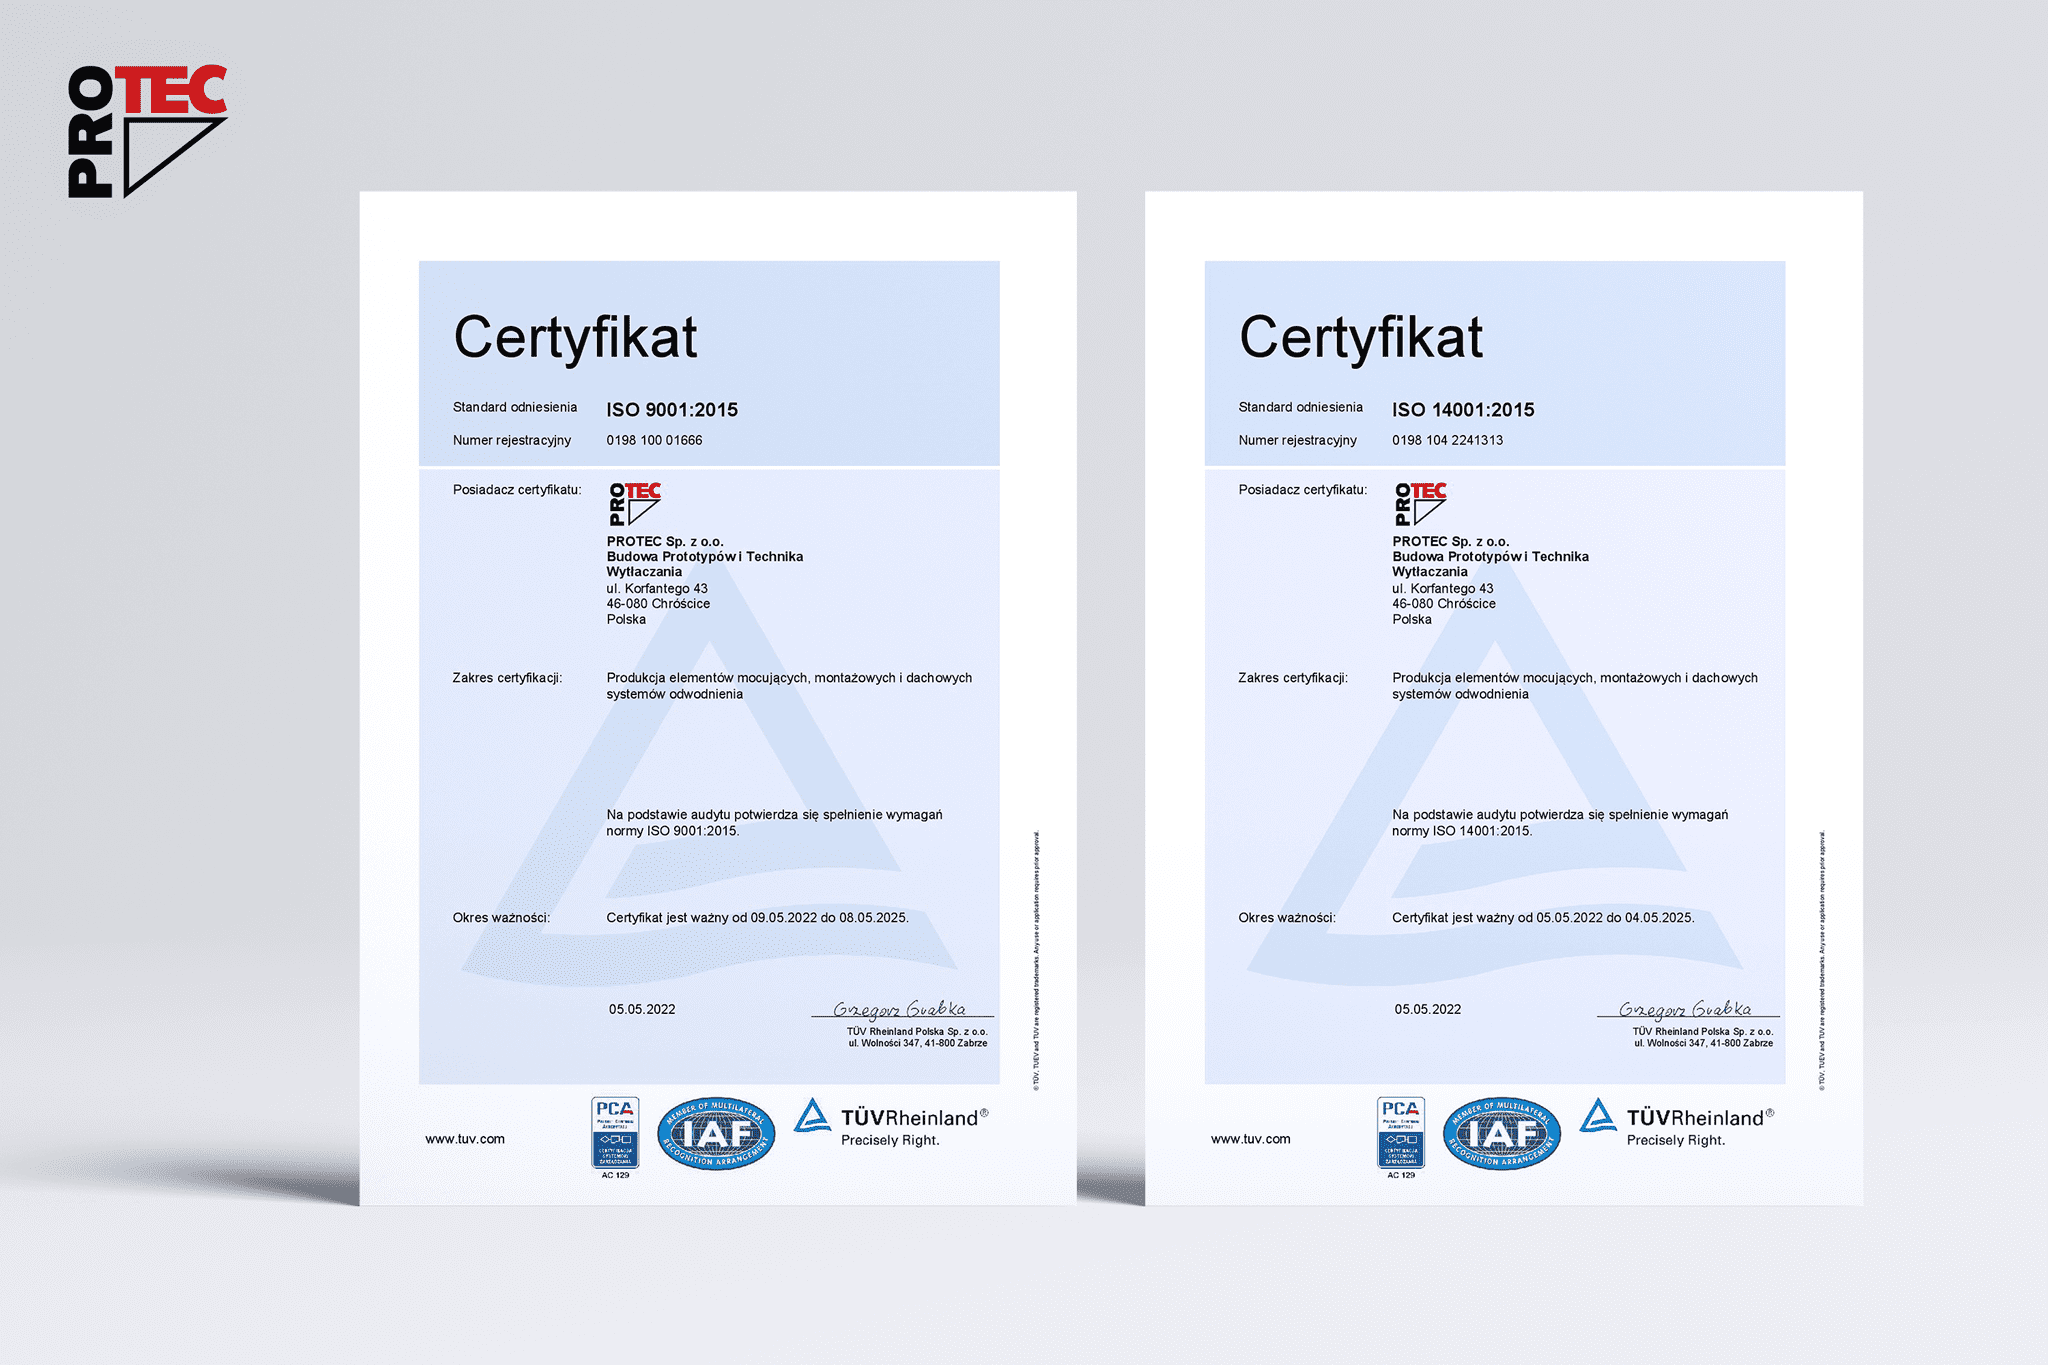 Certyfikat TÜV Rheinland Norm ISO 9001:2015 oraz ISO 14001:2015 dla PROTEC Sp. z o.o. 1